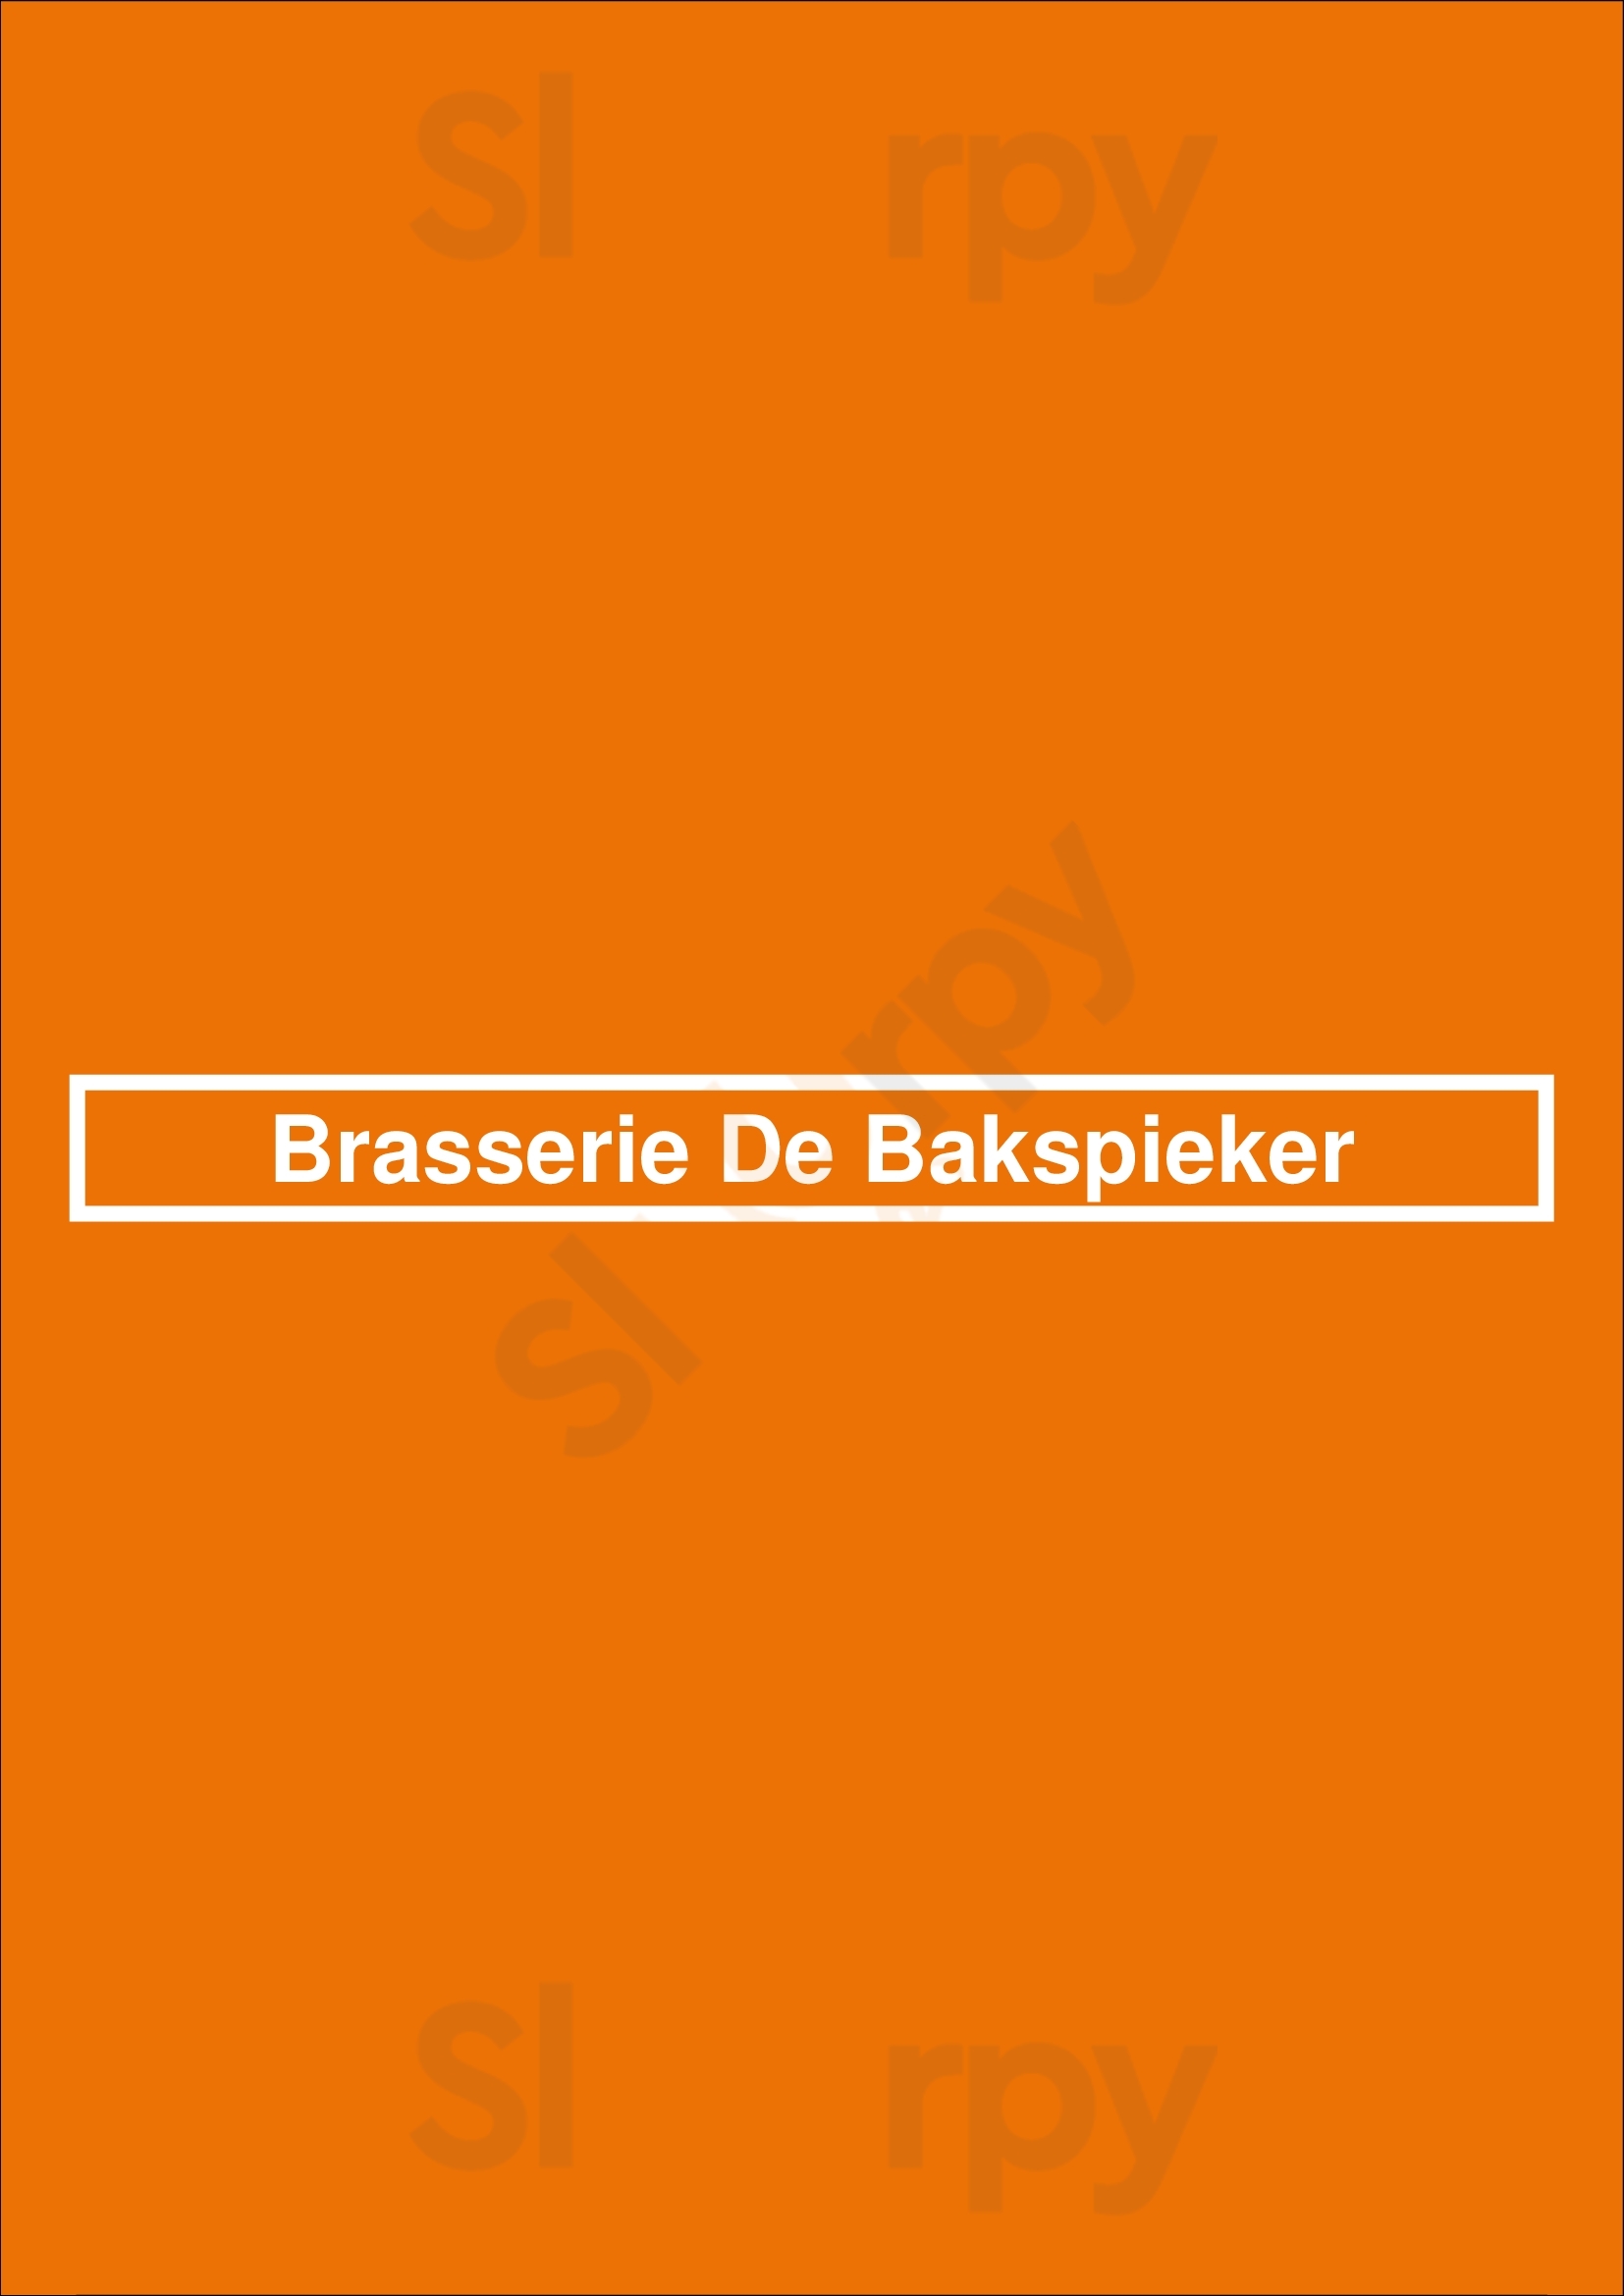 Brasserie De Bakspieker Enschede Menu - 1